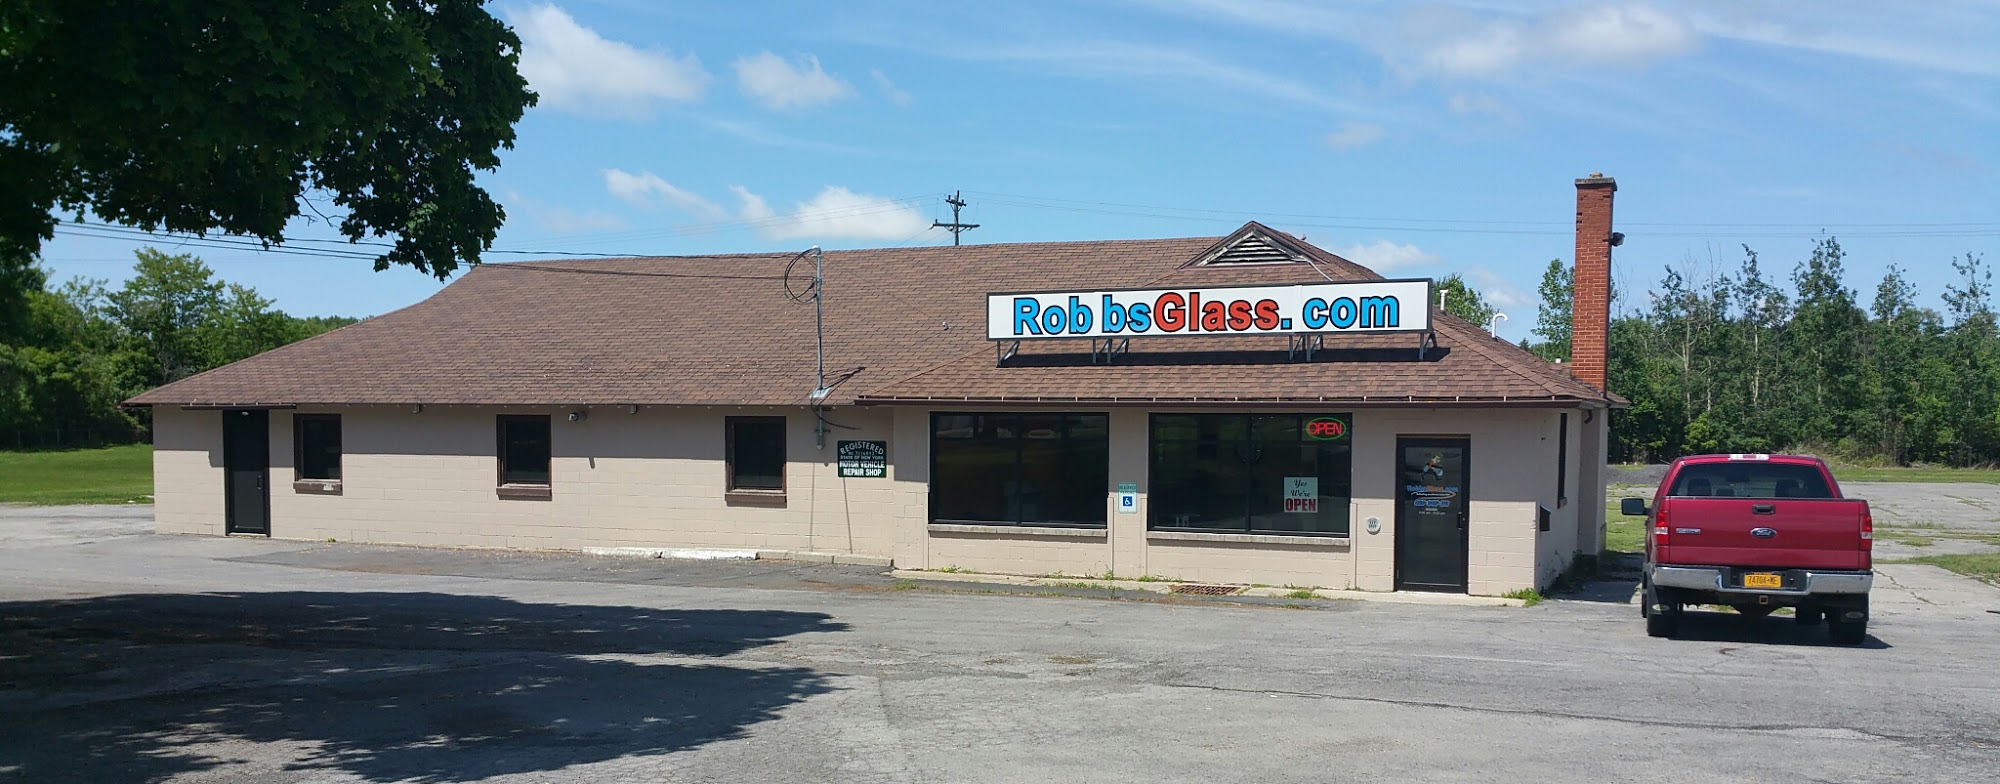 Robb's Glass Inc.